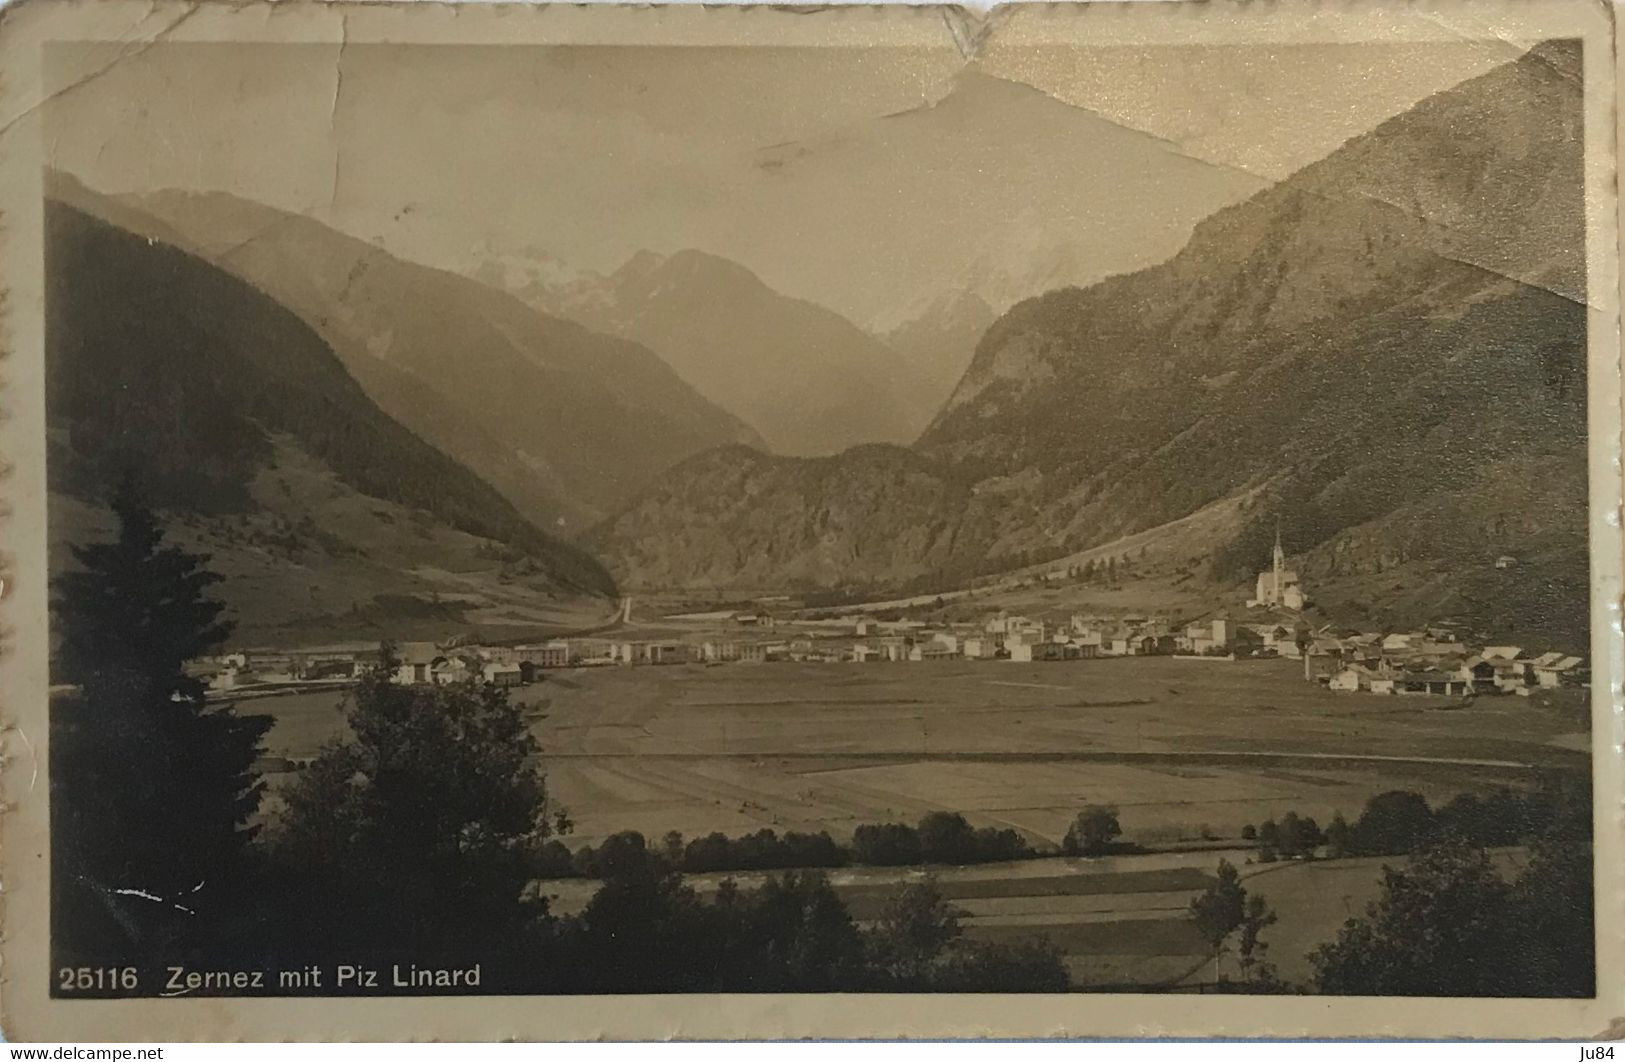 Suisse - Grisons - Zernez Mit Piz Linard - Carte Postale Photo - 1922 - Zernez